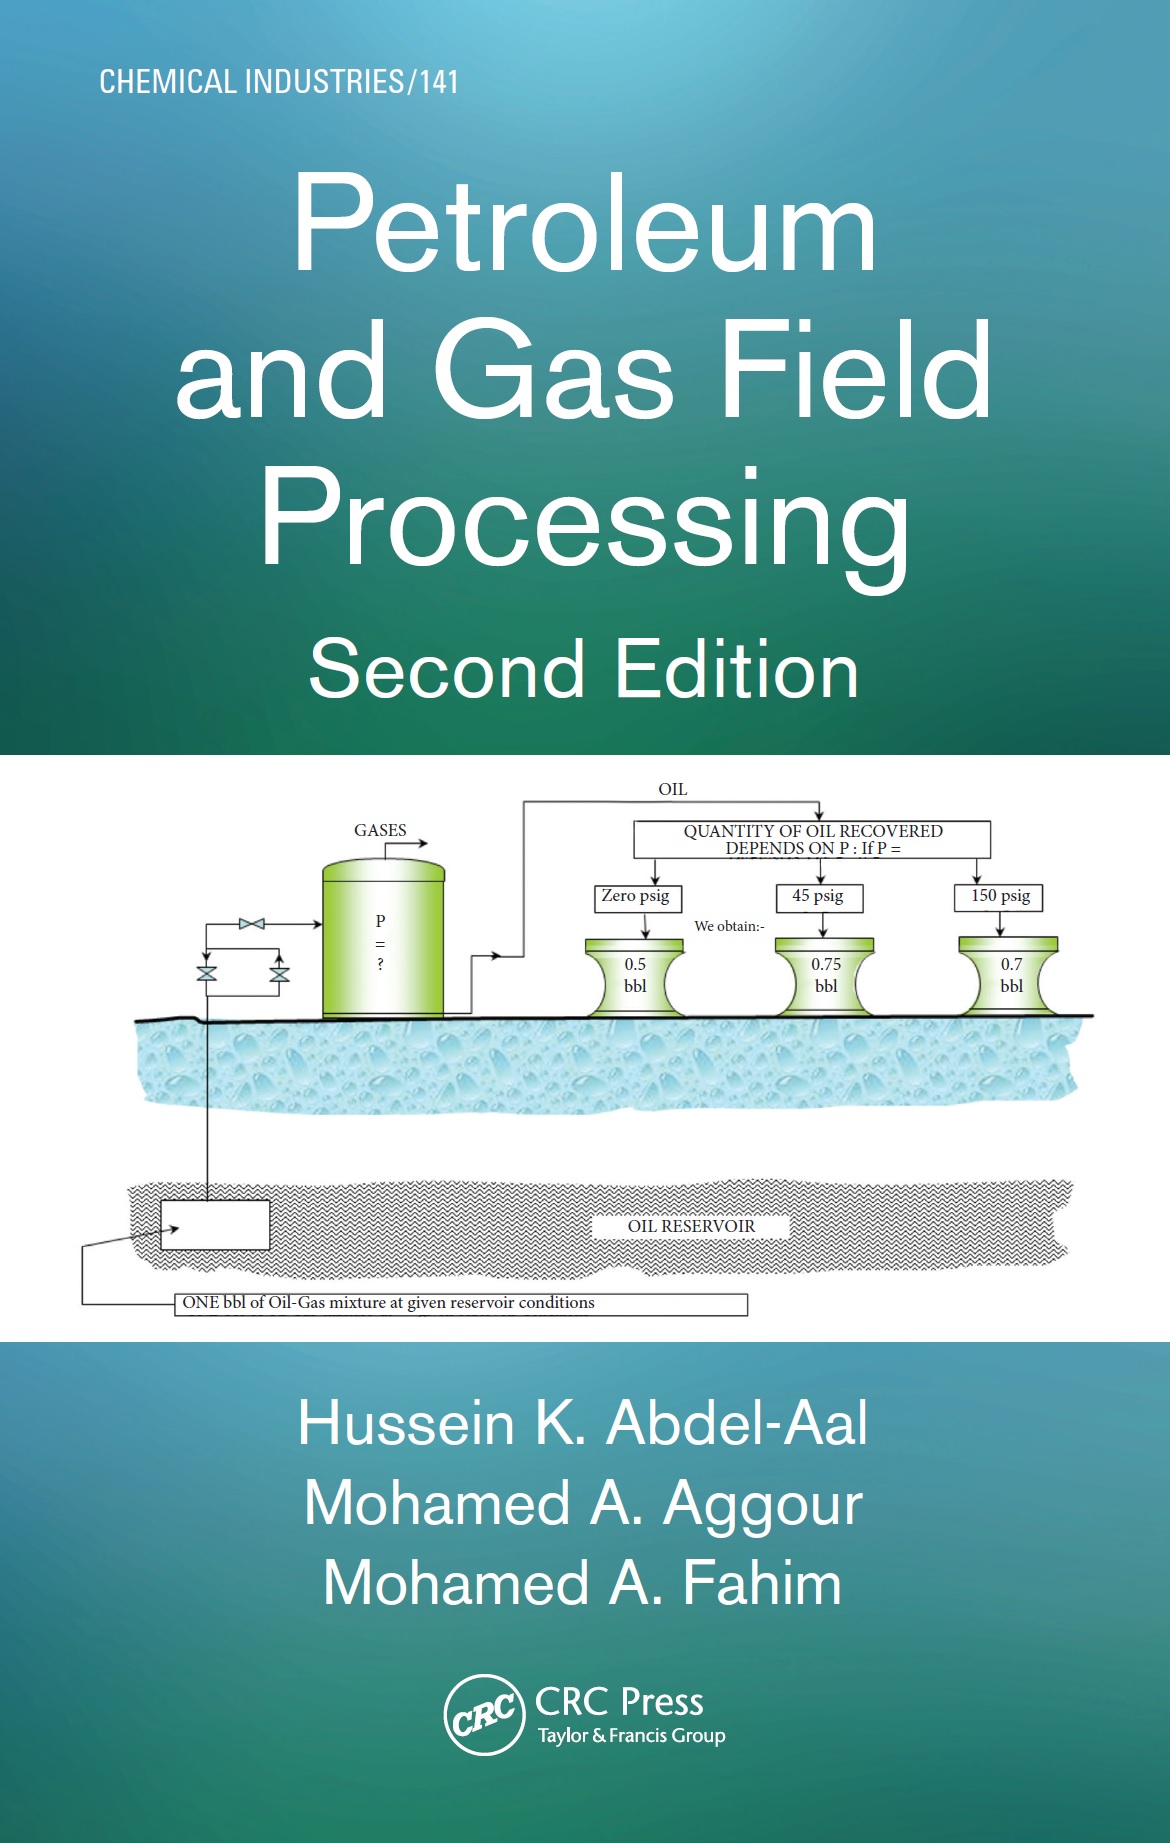 Petroleum слова учебник английского ioln and Gas. Tinrhert Gas field. Field processing